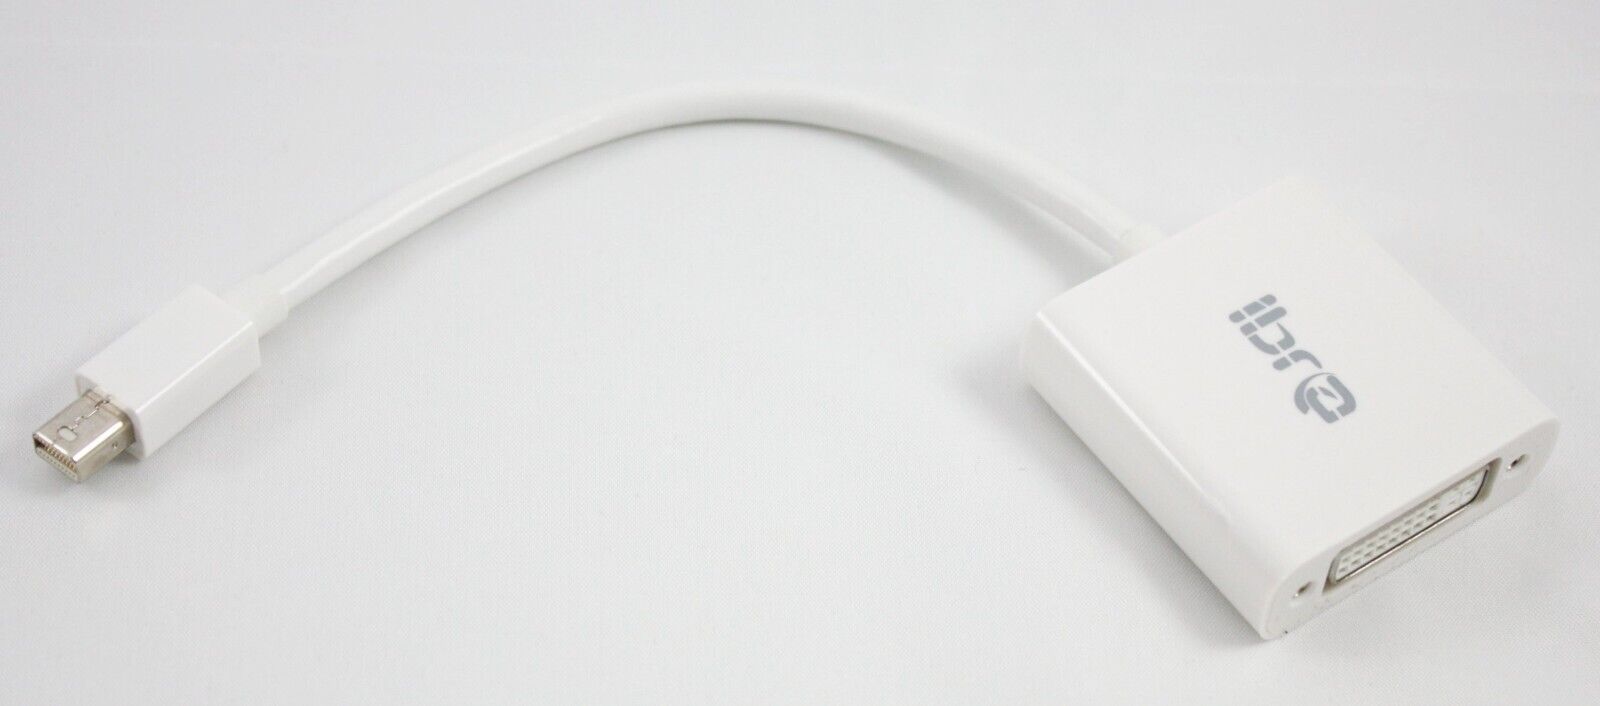 New Mini Display Port to DVI Adapter Lead Adapter For Apple Mac MacBook UK